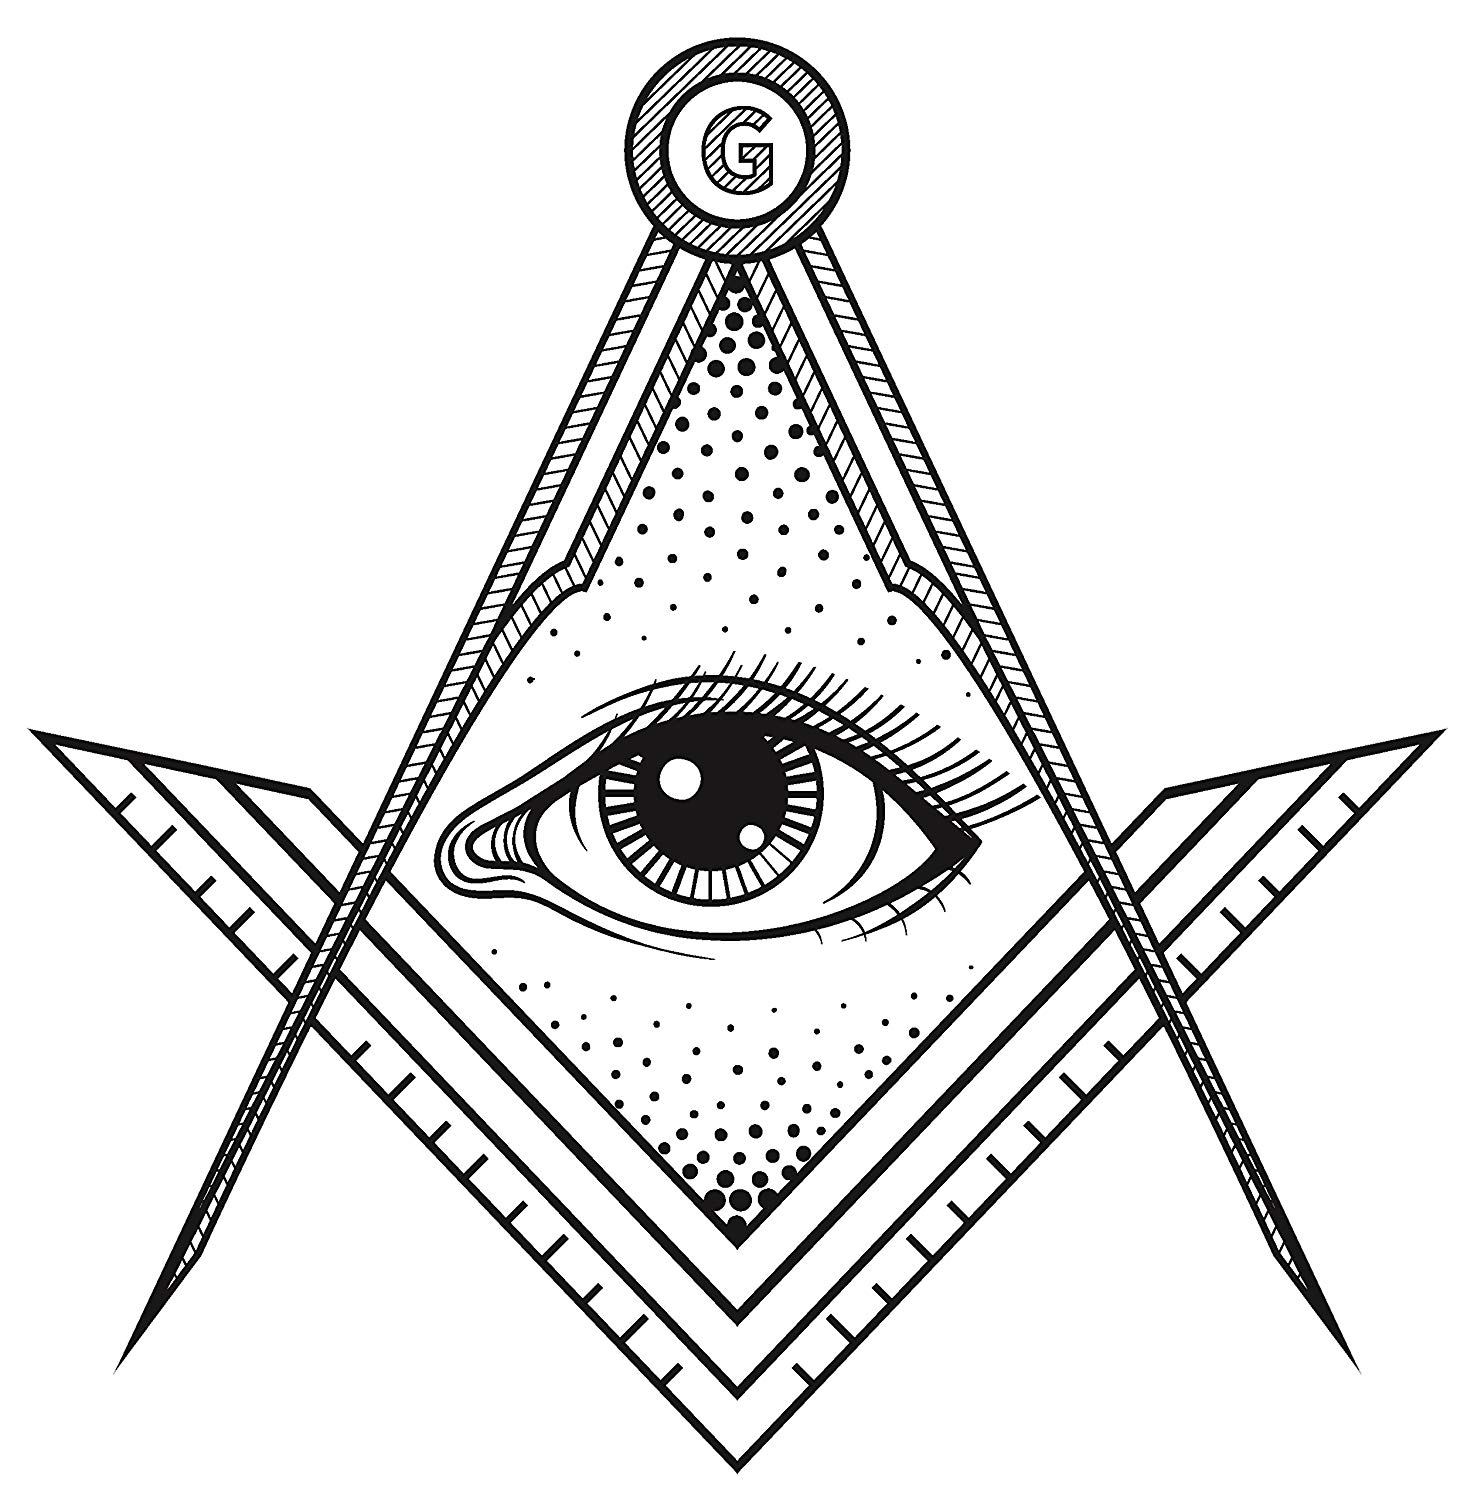 Eygptian Logo - Black and White Geometric Egyptian Logo with Eye